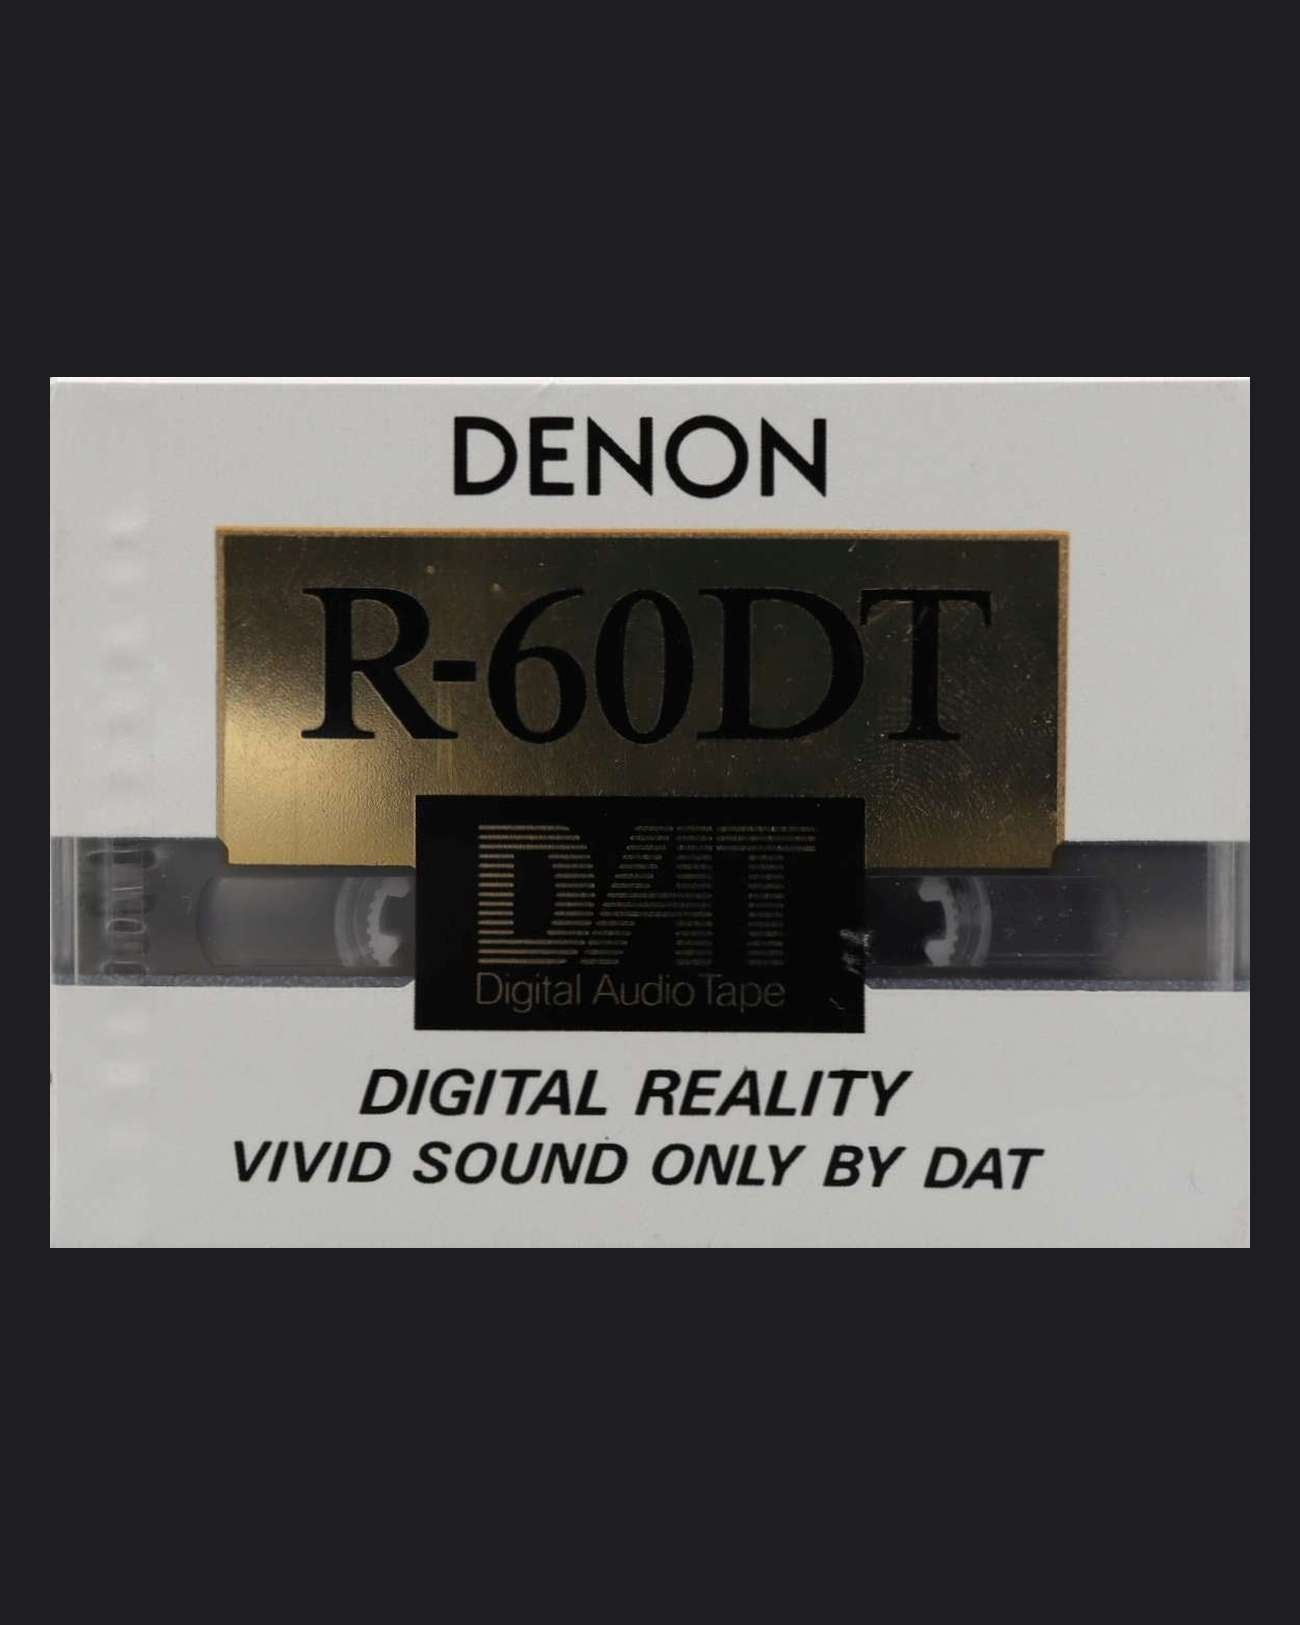 Denon DAT R-DT-S